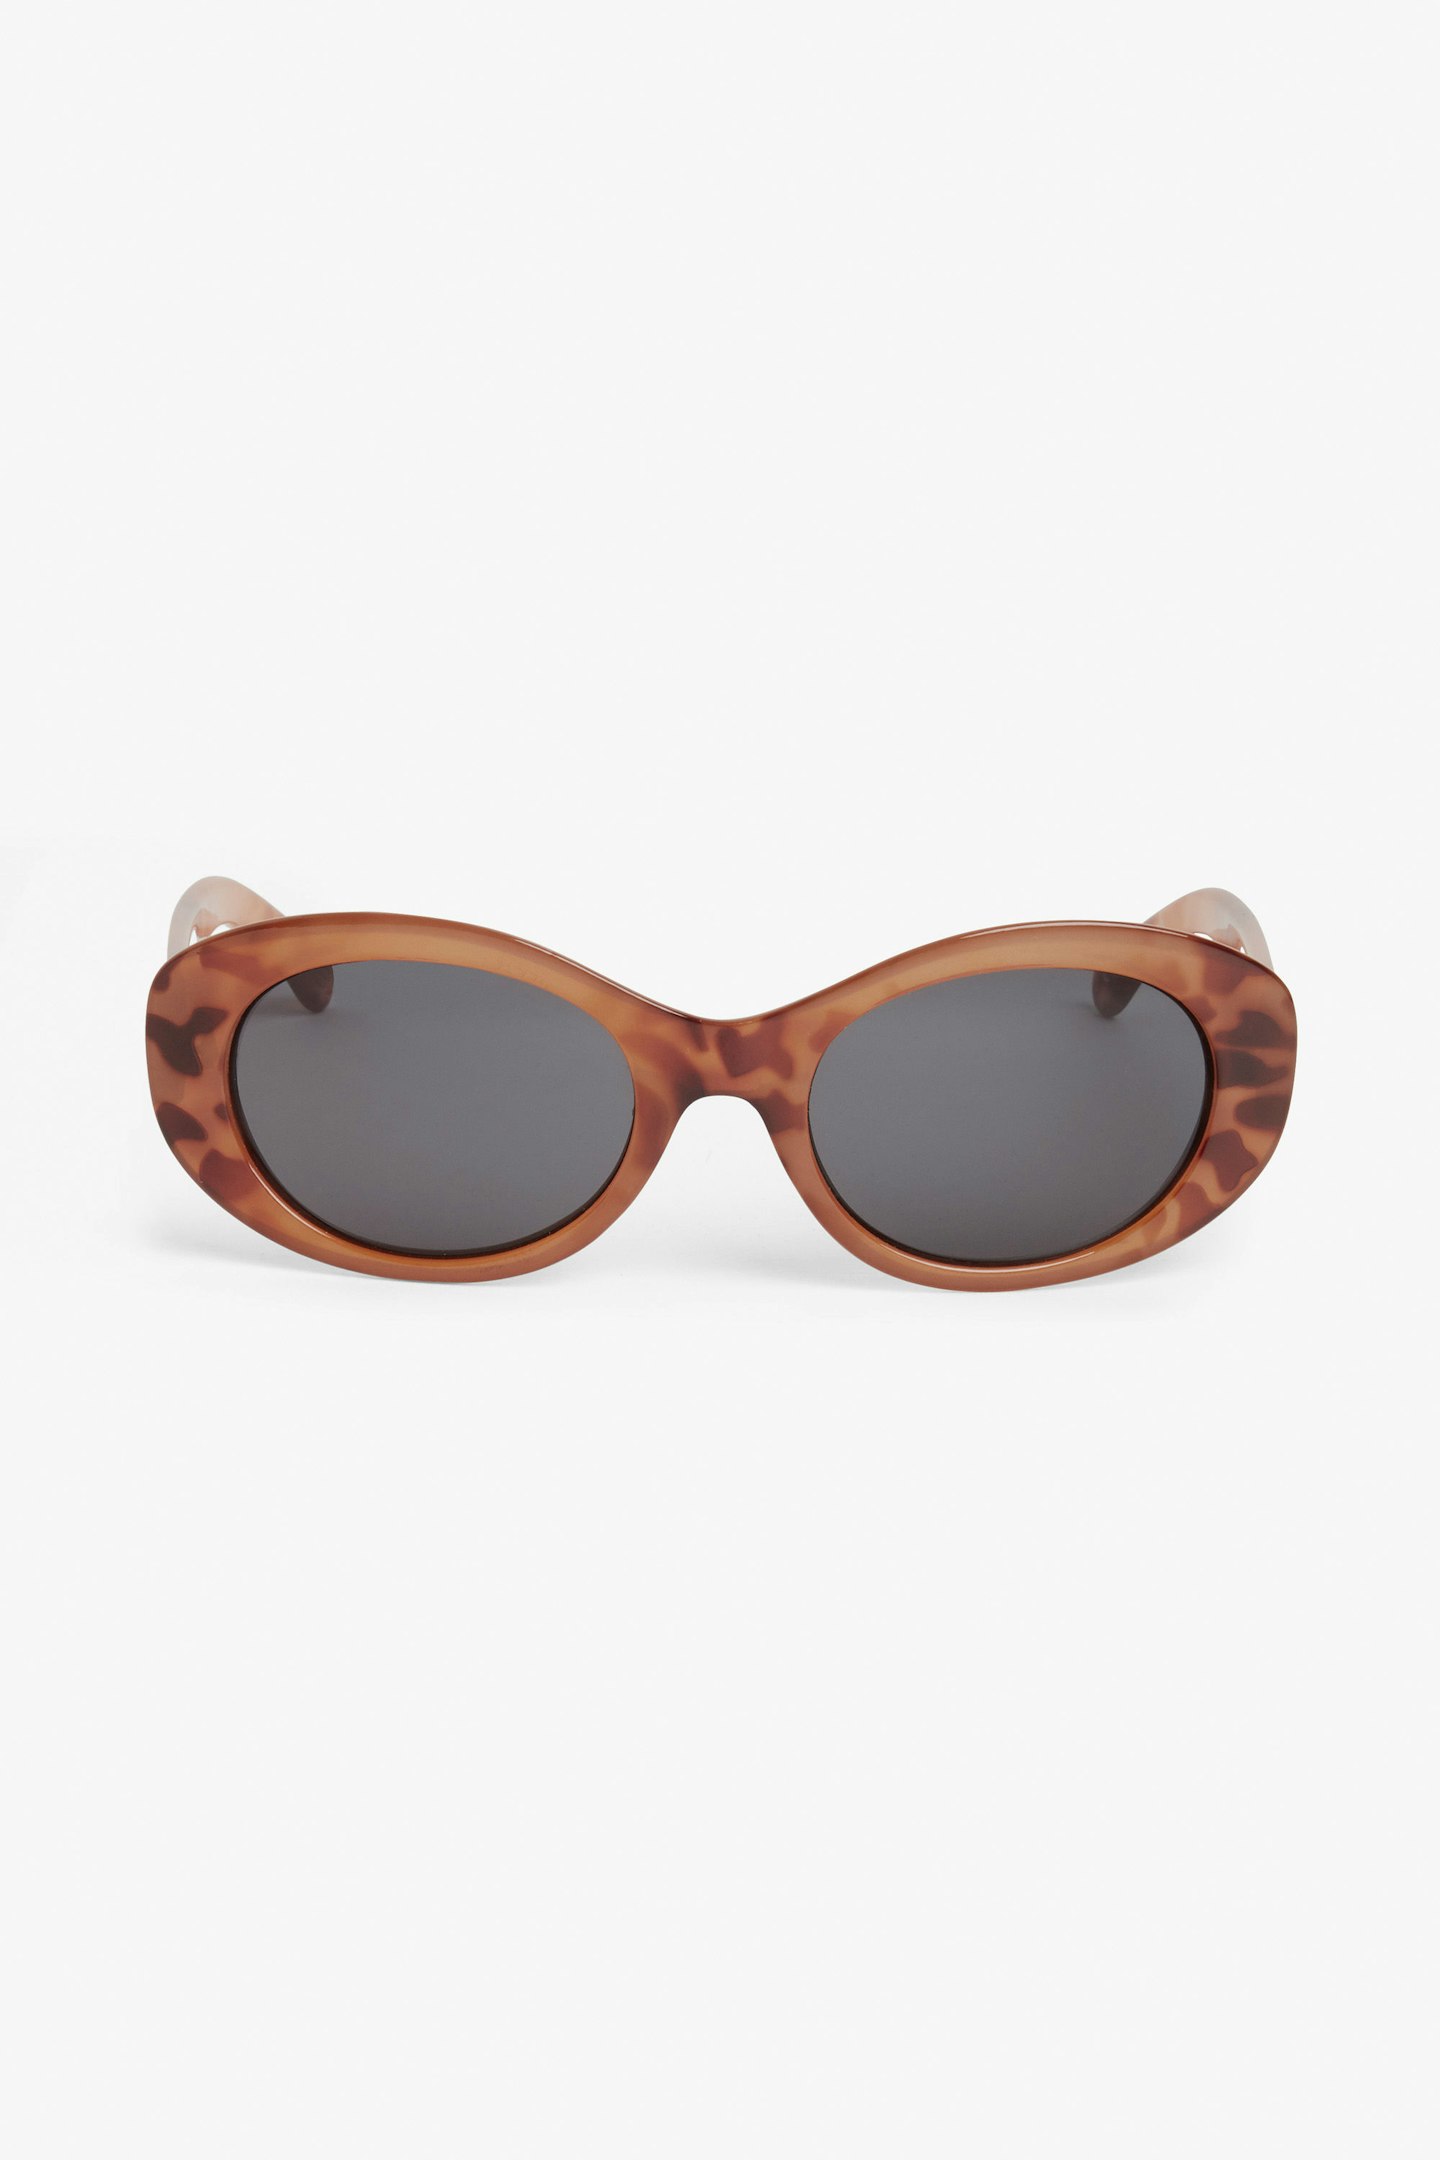 Monki sunglasses